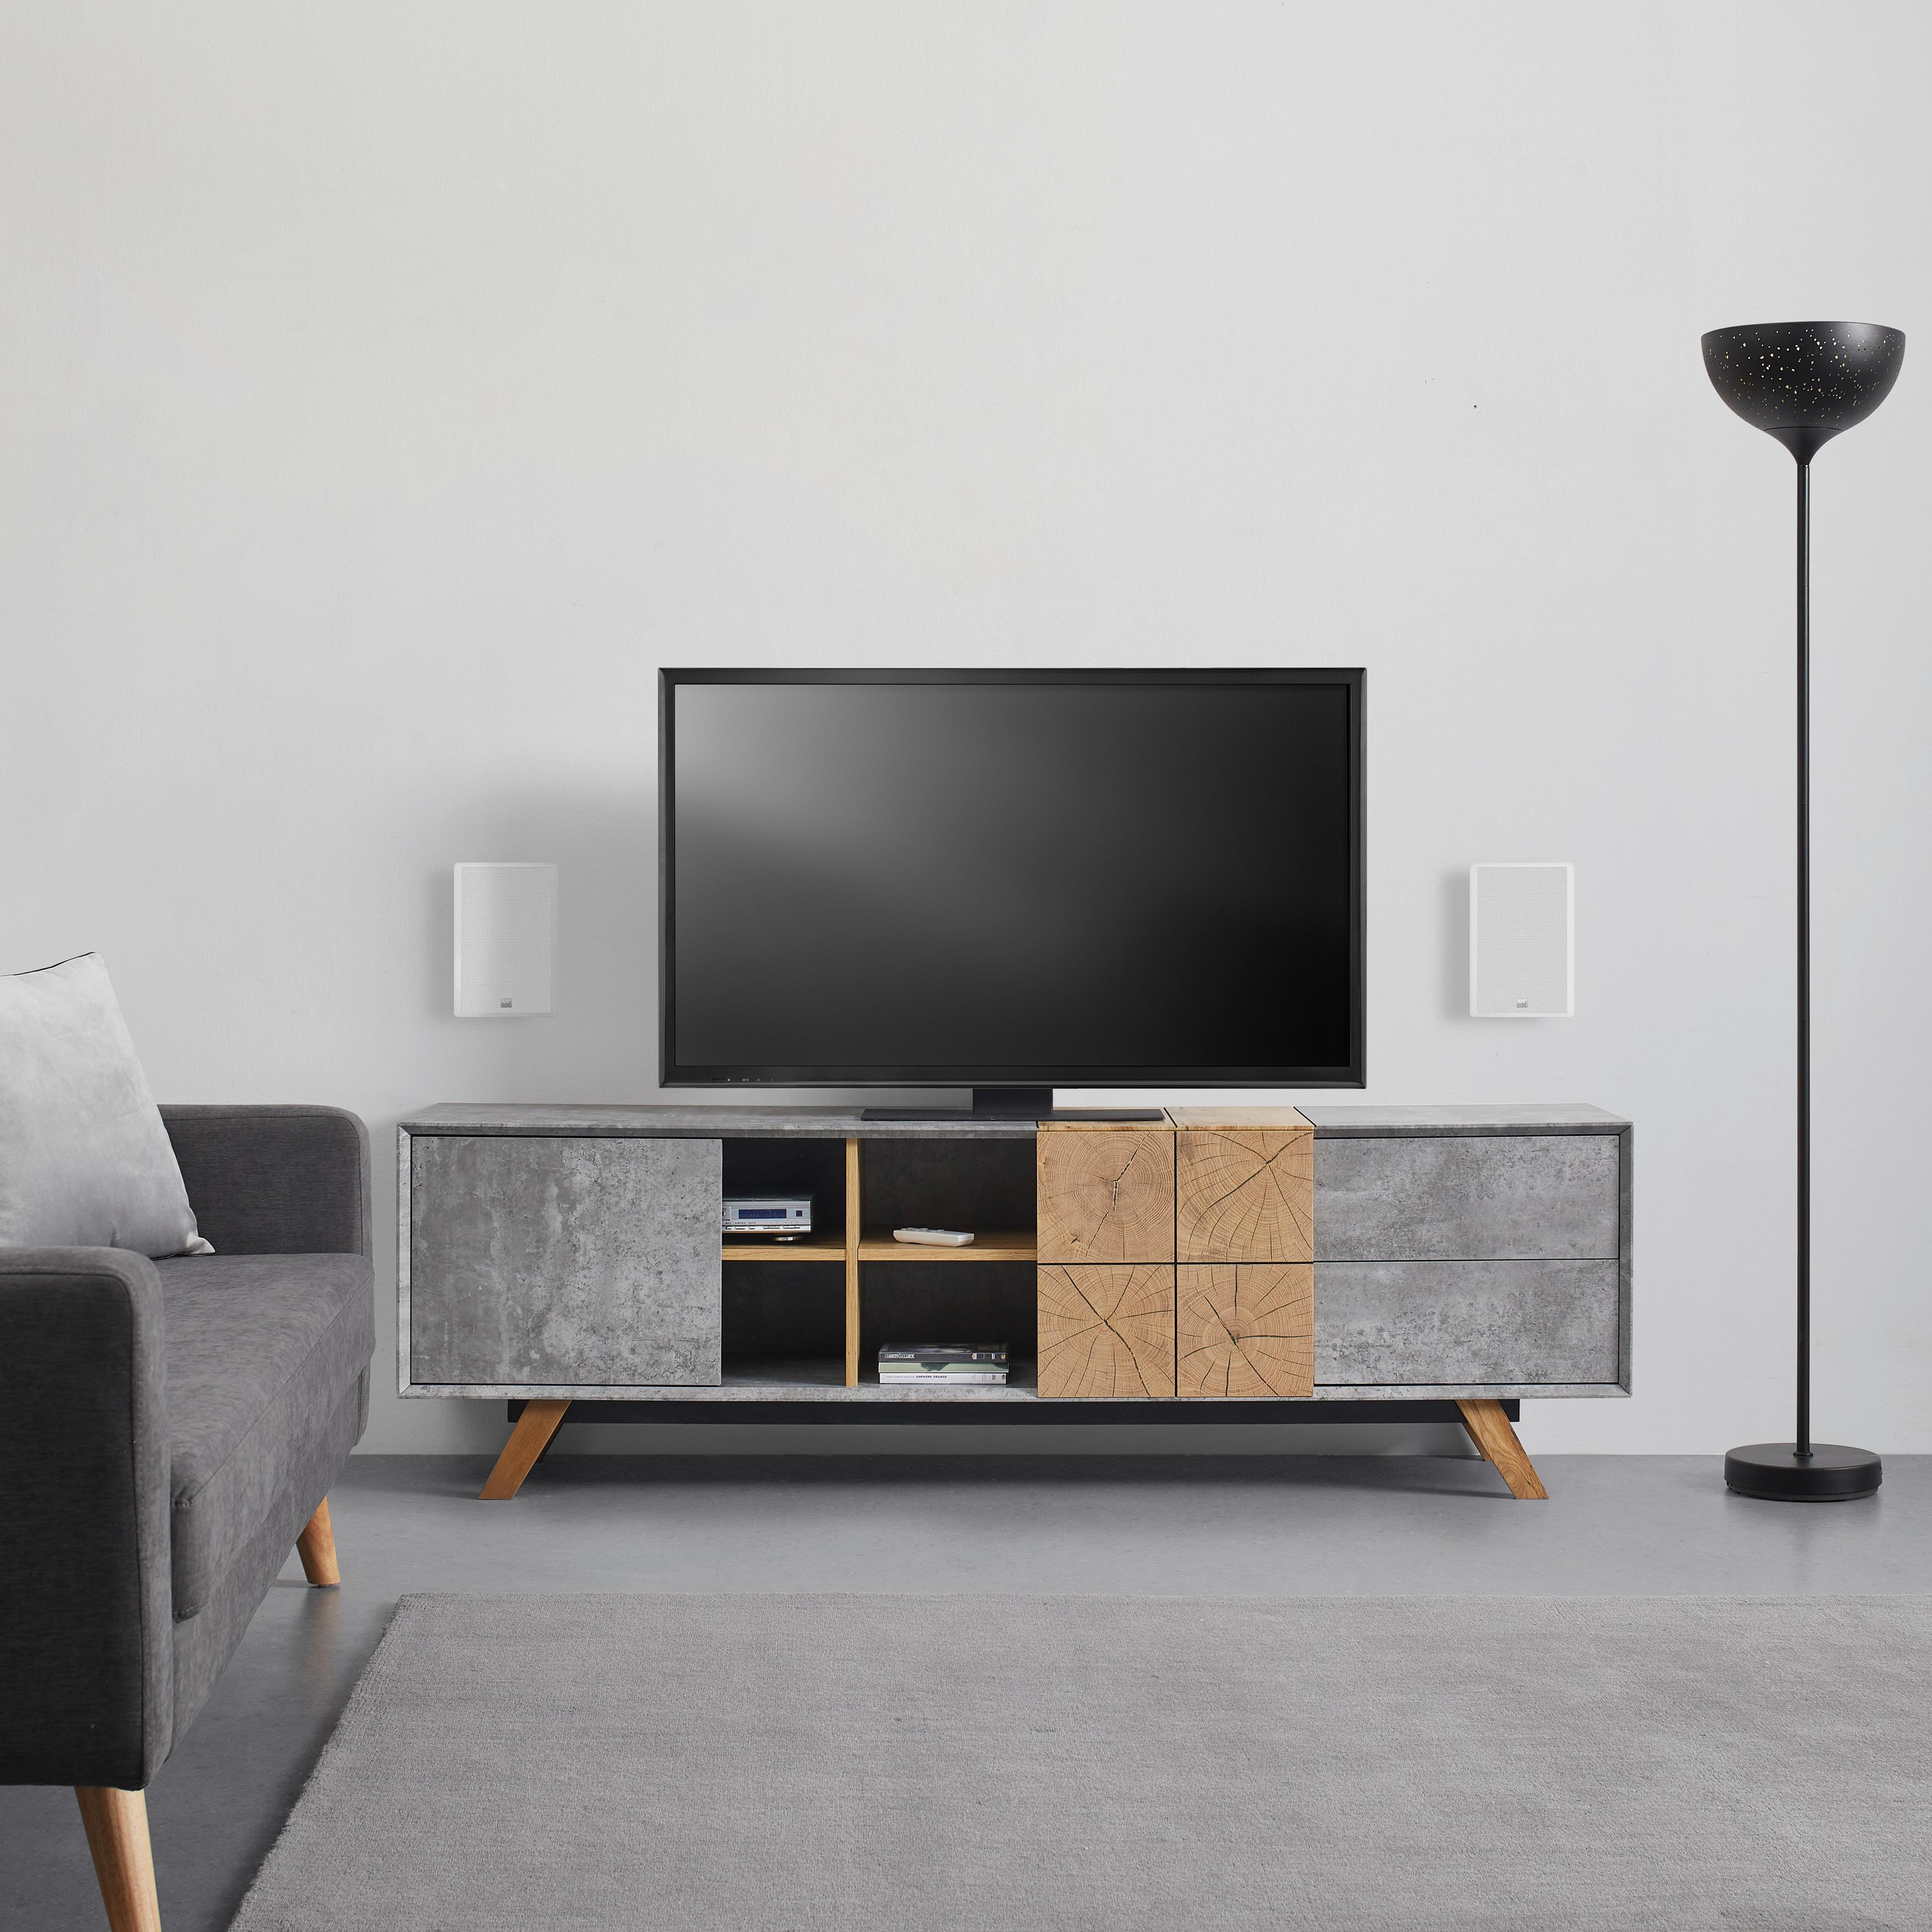 Tv Diel Casper - sivá/farby duba, Moderný, drevo (180/55/40cm) - Modern Living